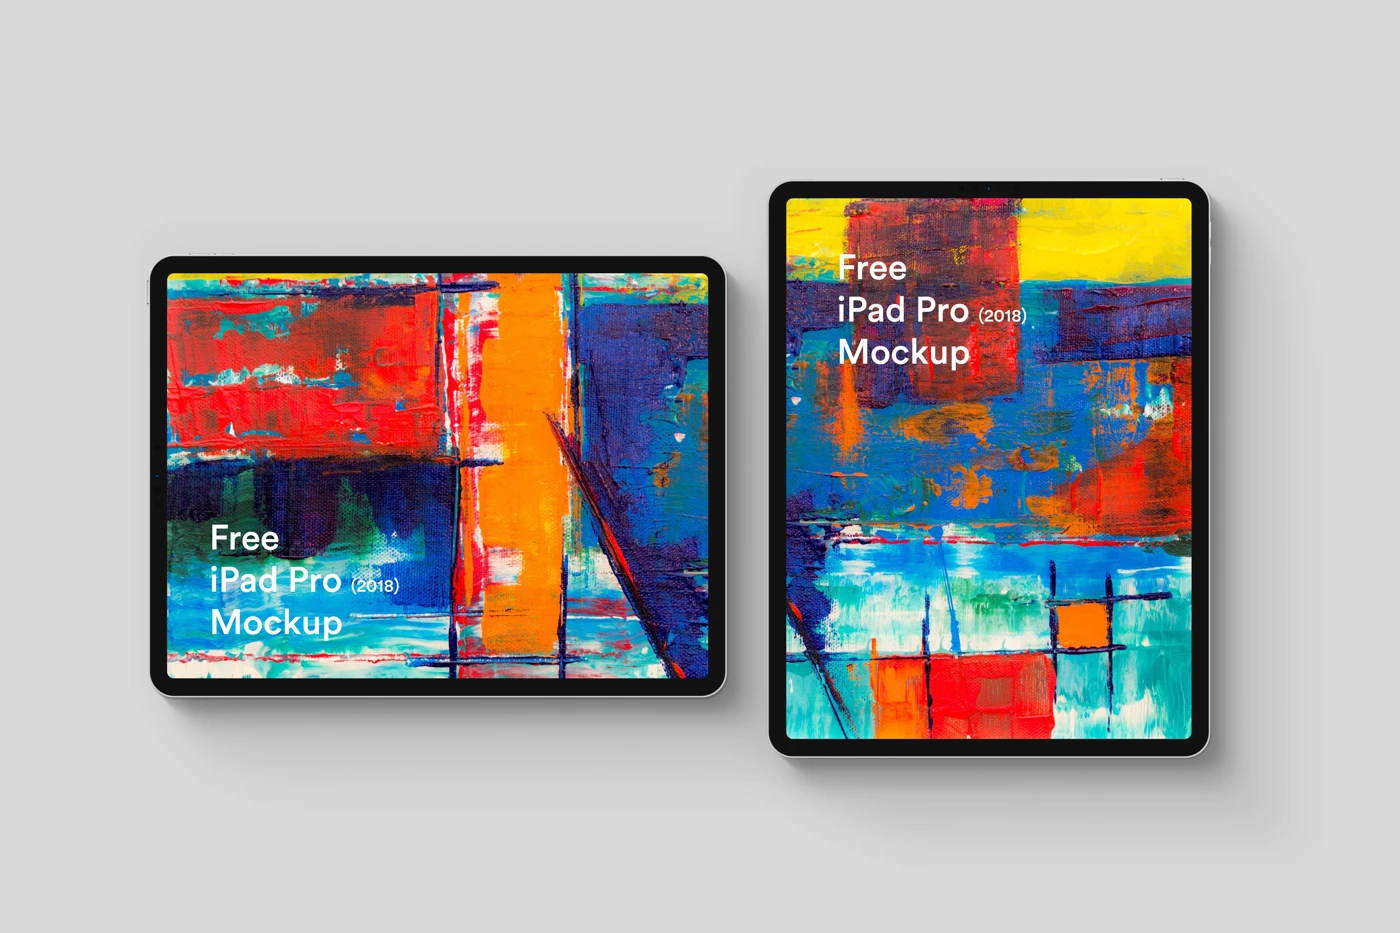 Free iPad Pro 2018 Mockup